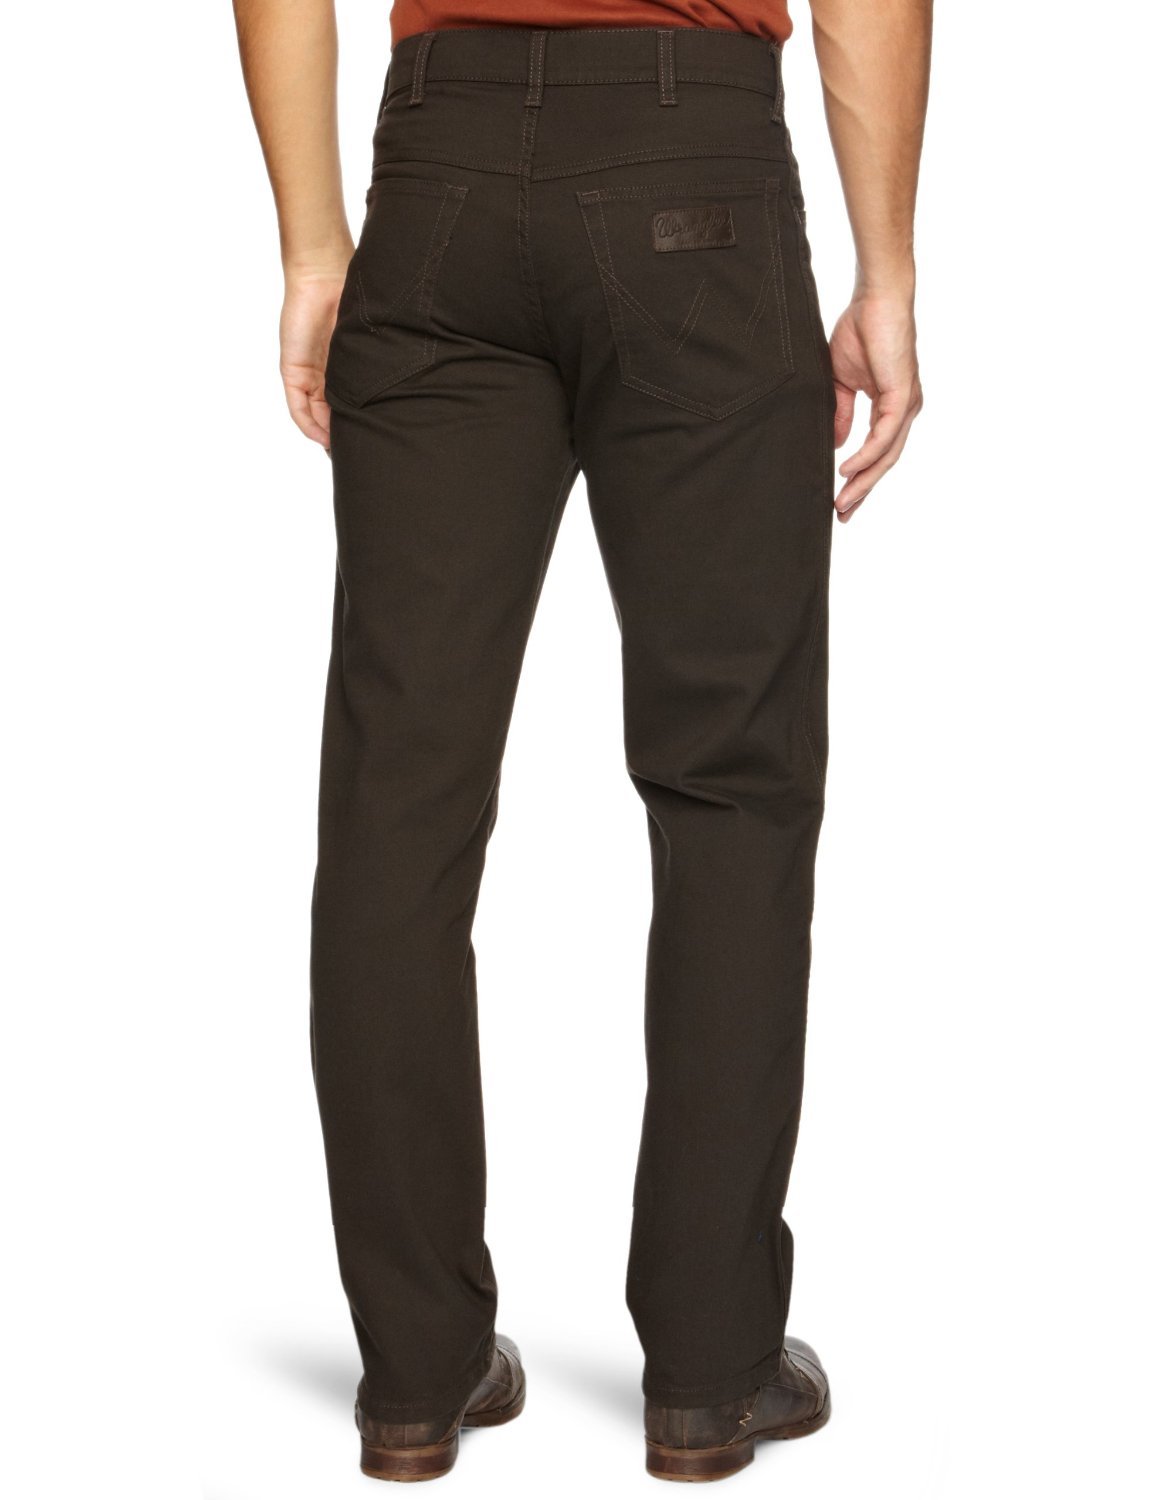 Wrangler Texas Stretch Jeans Mens Dark Brown Regular Fit Soft Fabric ...